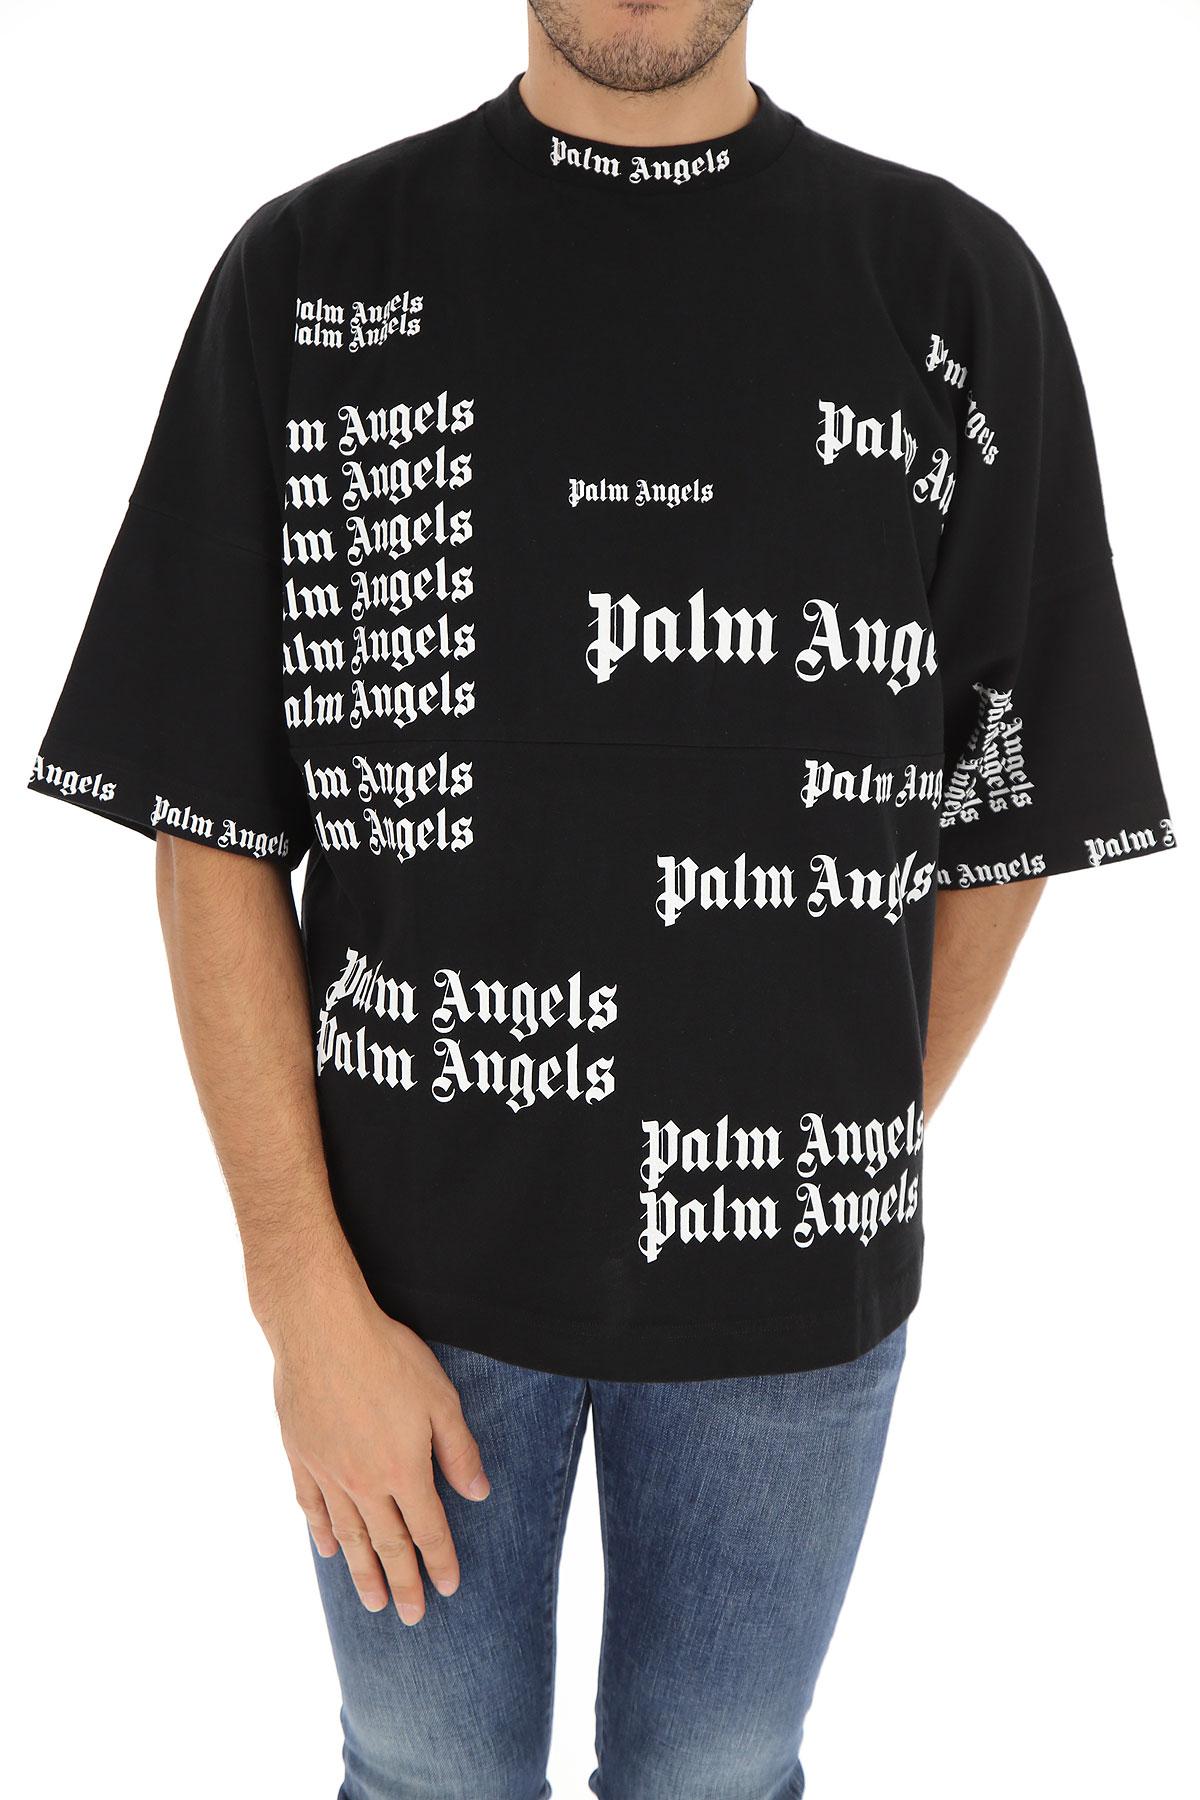 palm angels tee shirt